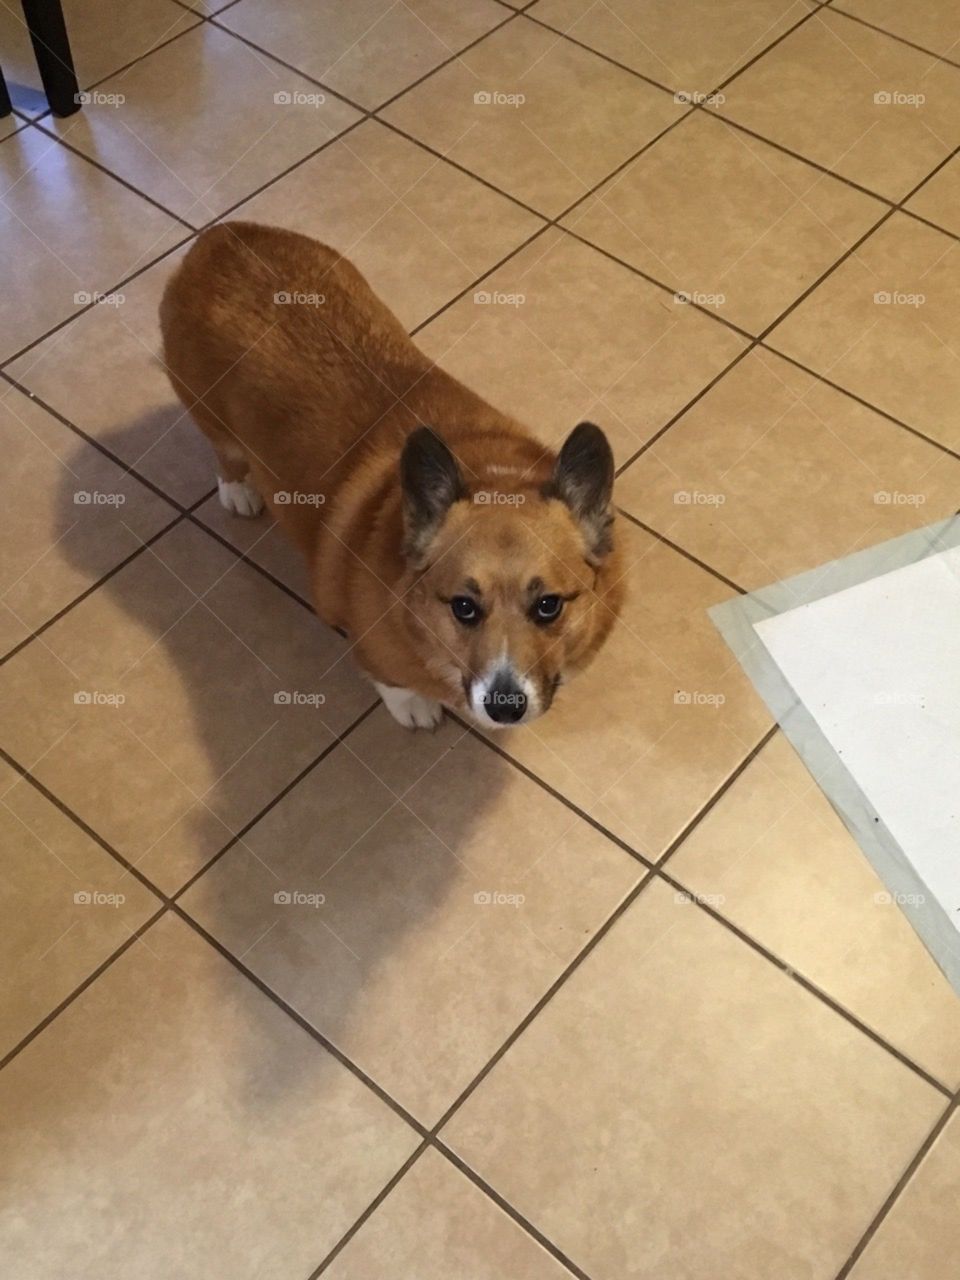 mischievous corgi naughty staring in kitchen small dog on tile tan floor red coat pembroke welsh corgi